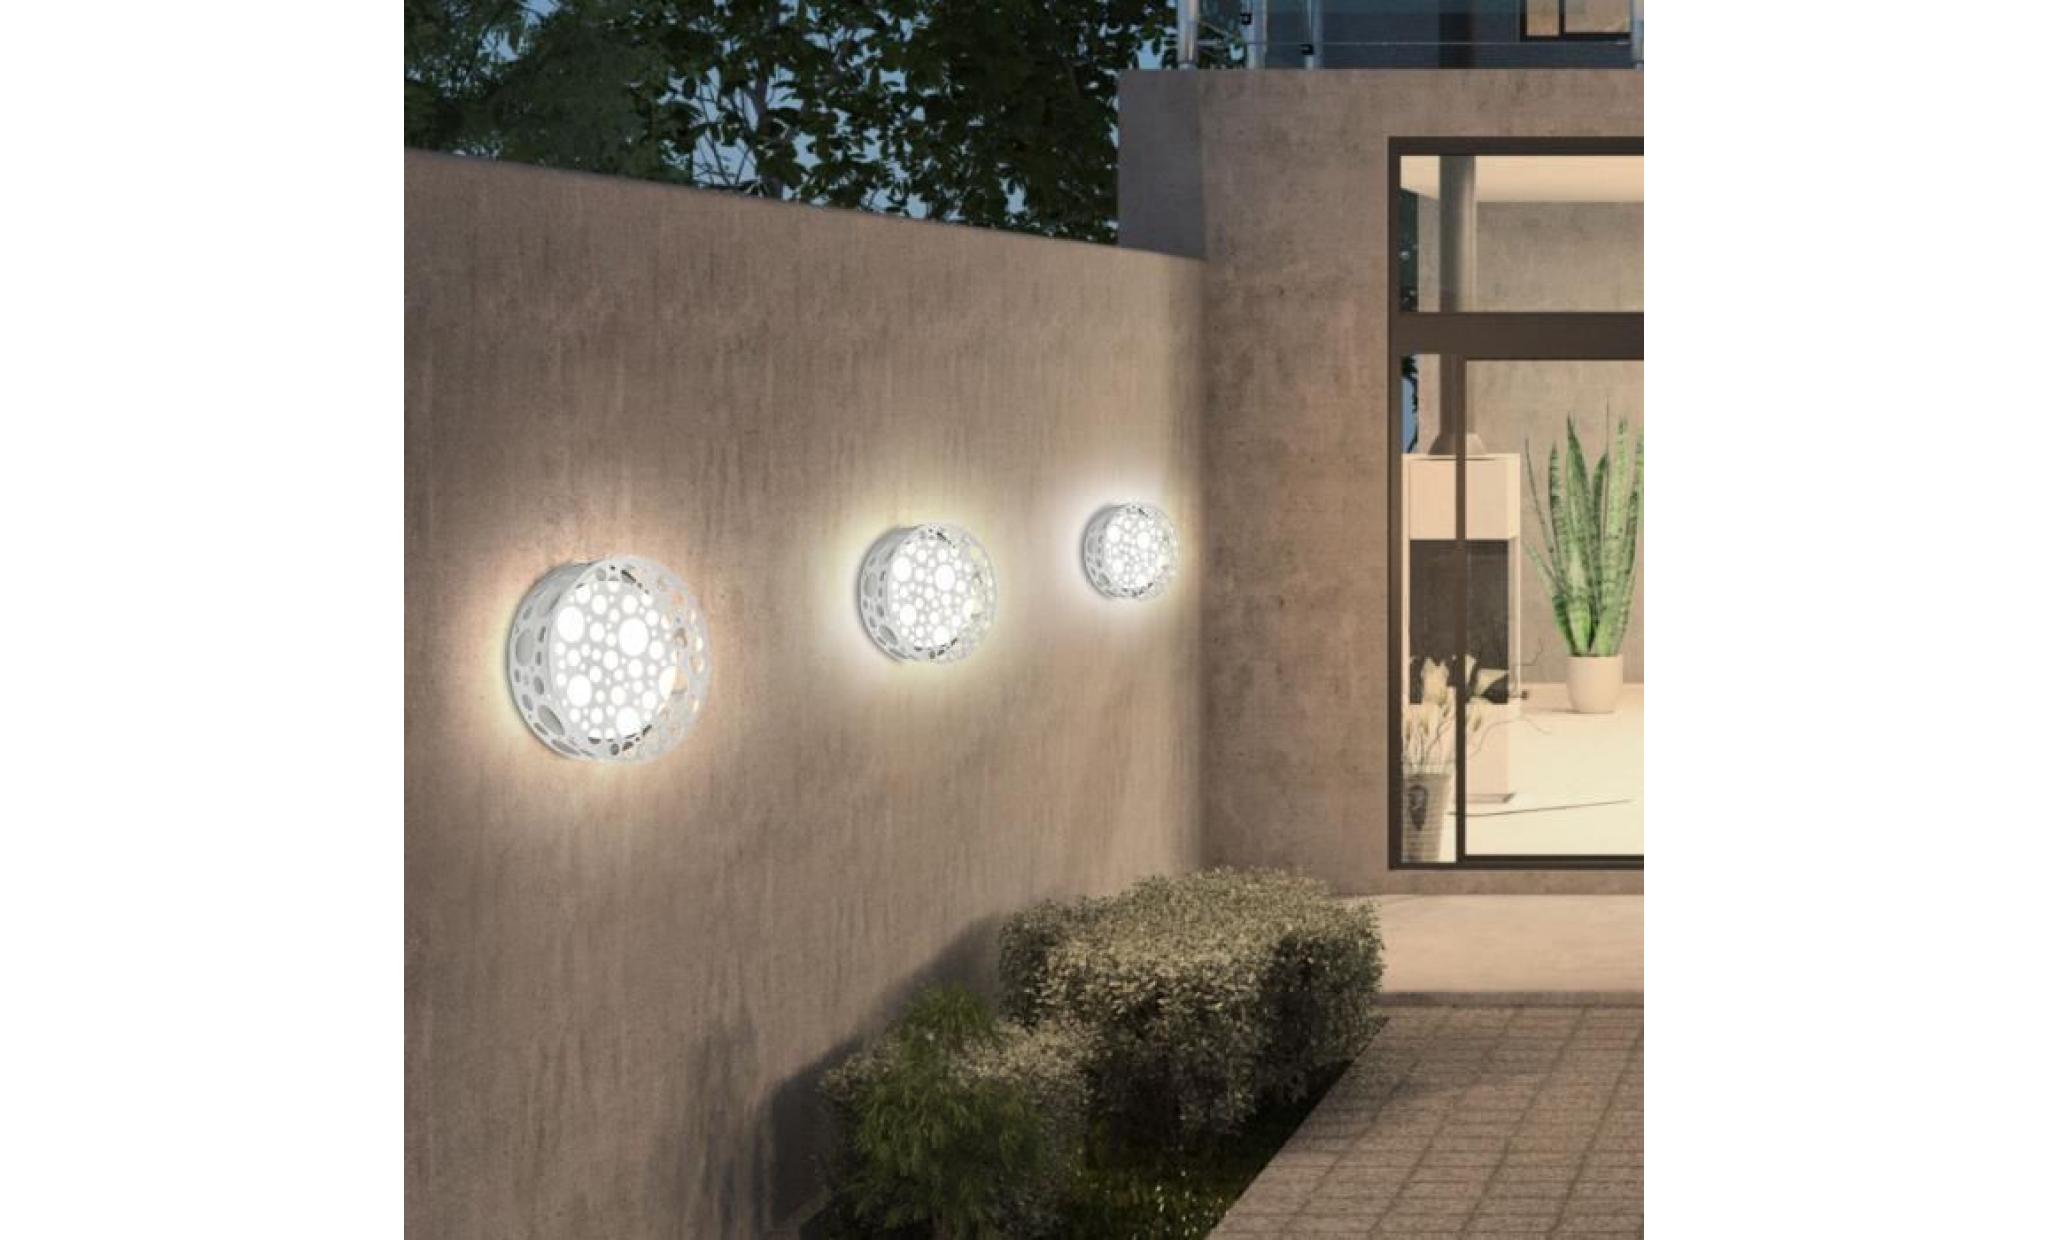 applique luminaire mural espace extérieur verre aluminium terrasse jardin ip54 pas cher